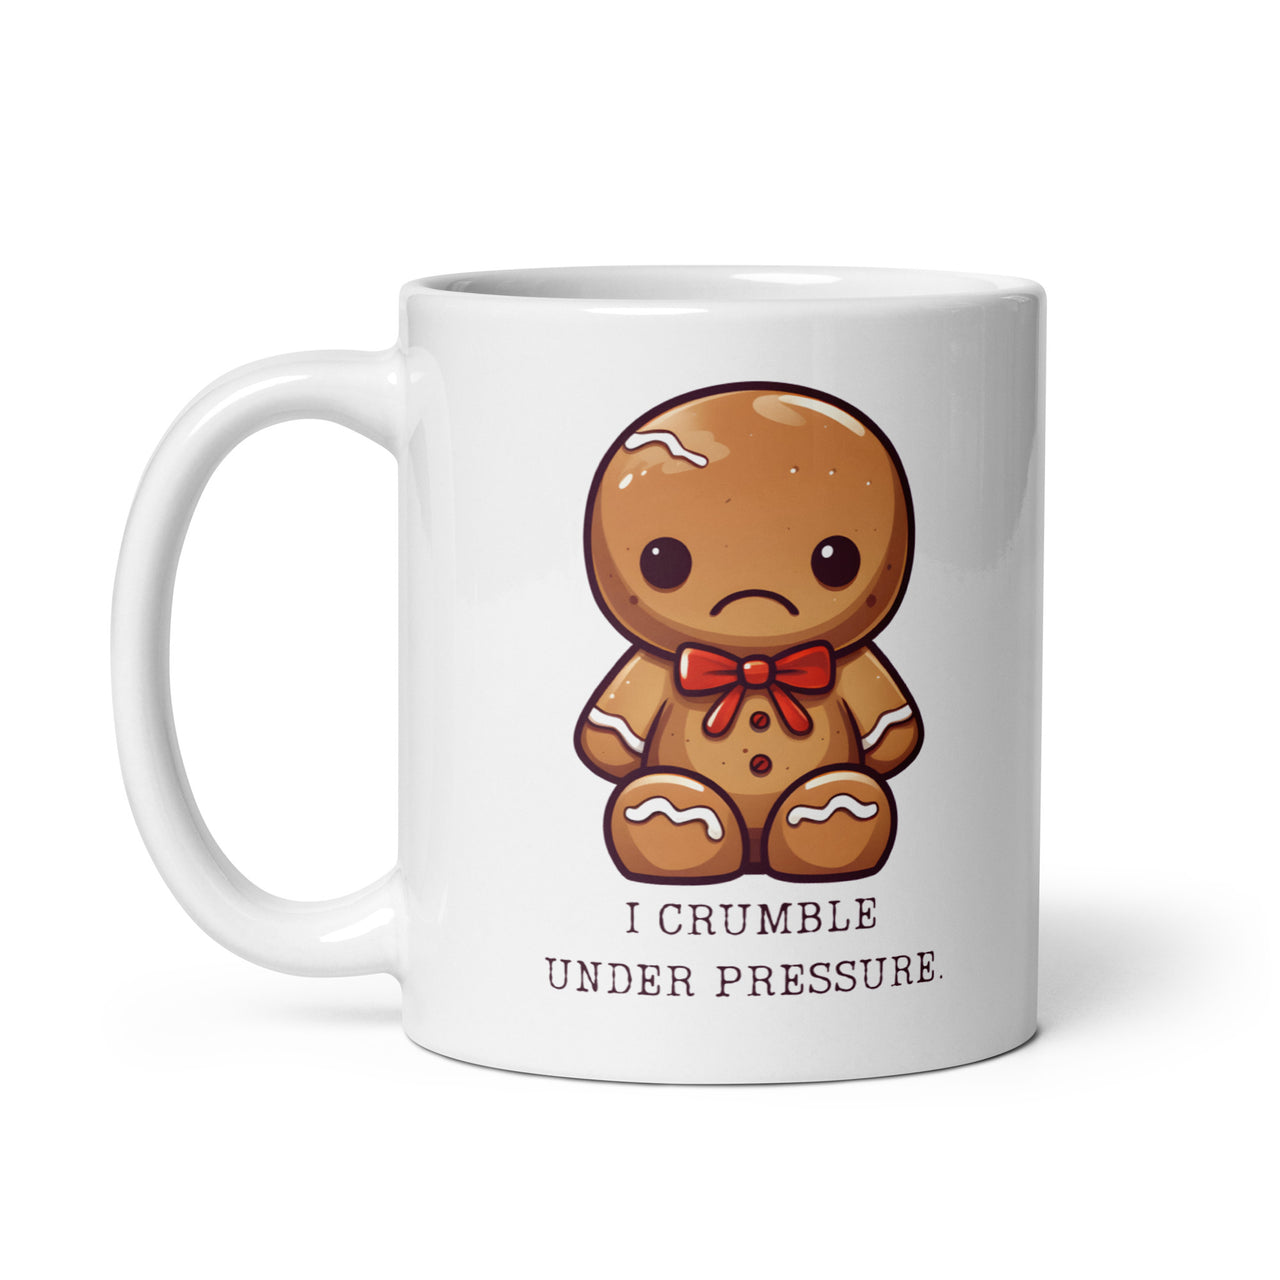 Crumble with Pressure: Sad Gingerbread White Mug